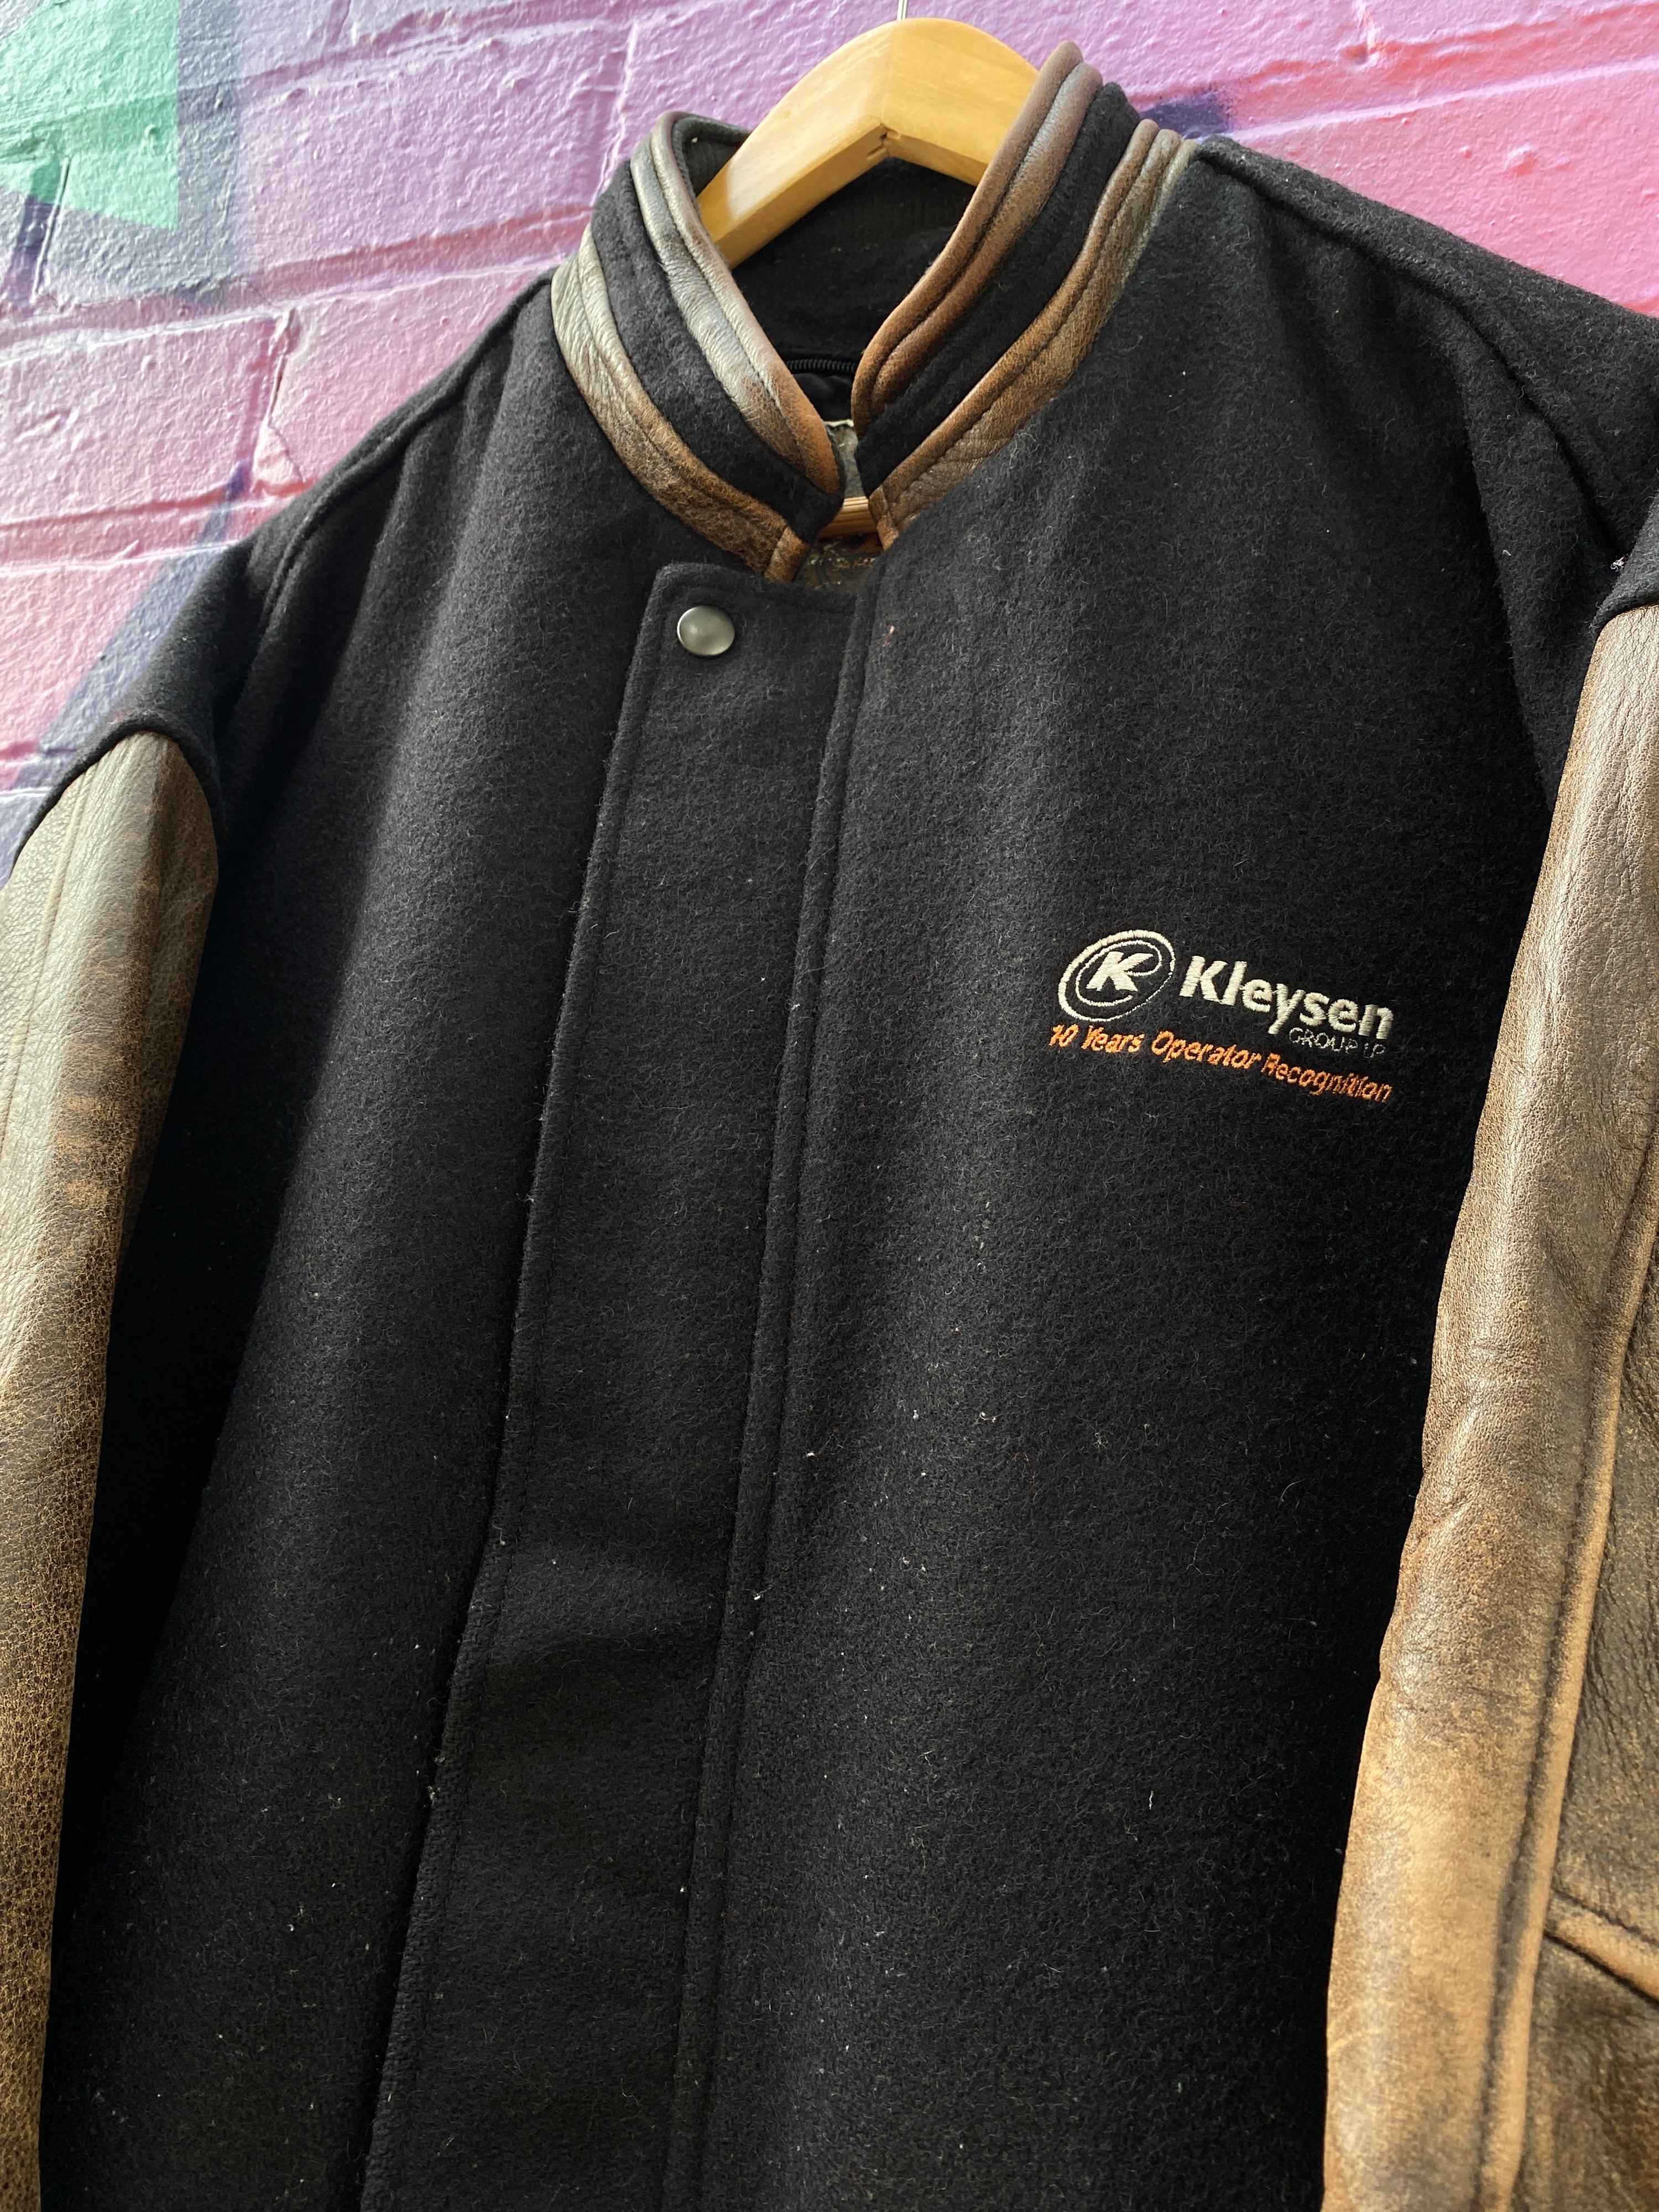 L - Vintage 'Kleysen' Varsity Jacket Black/Brown